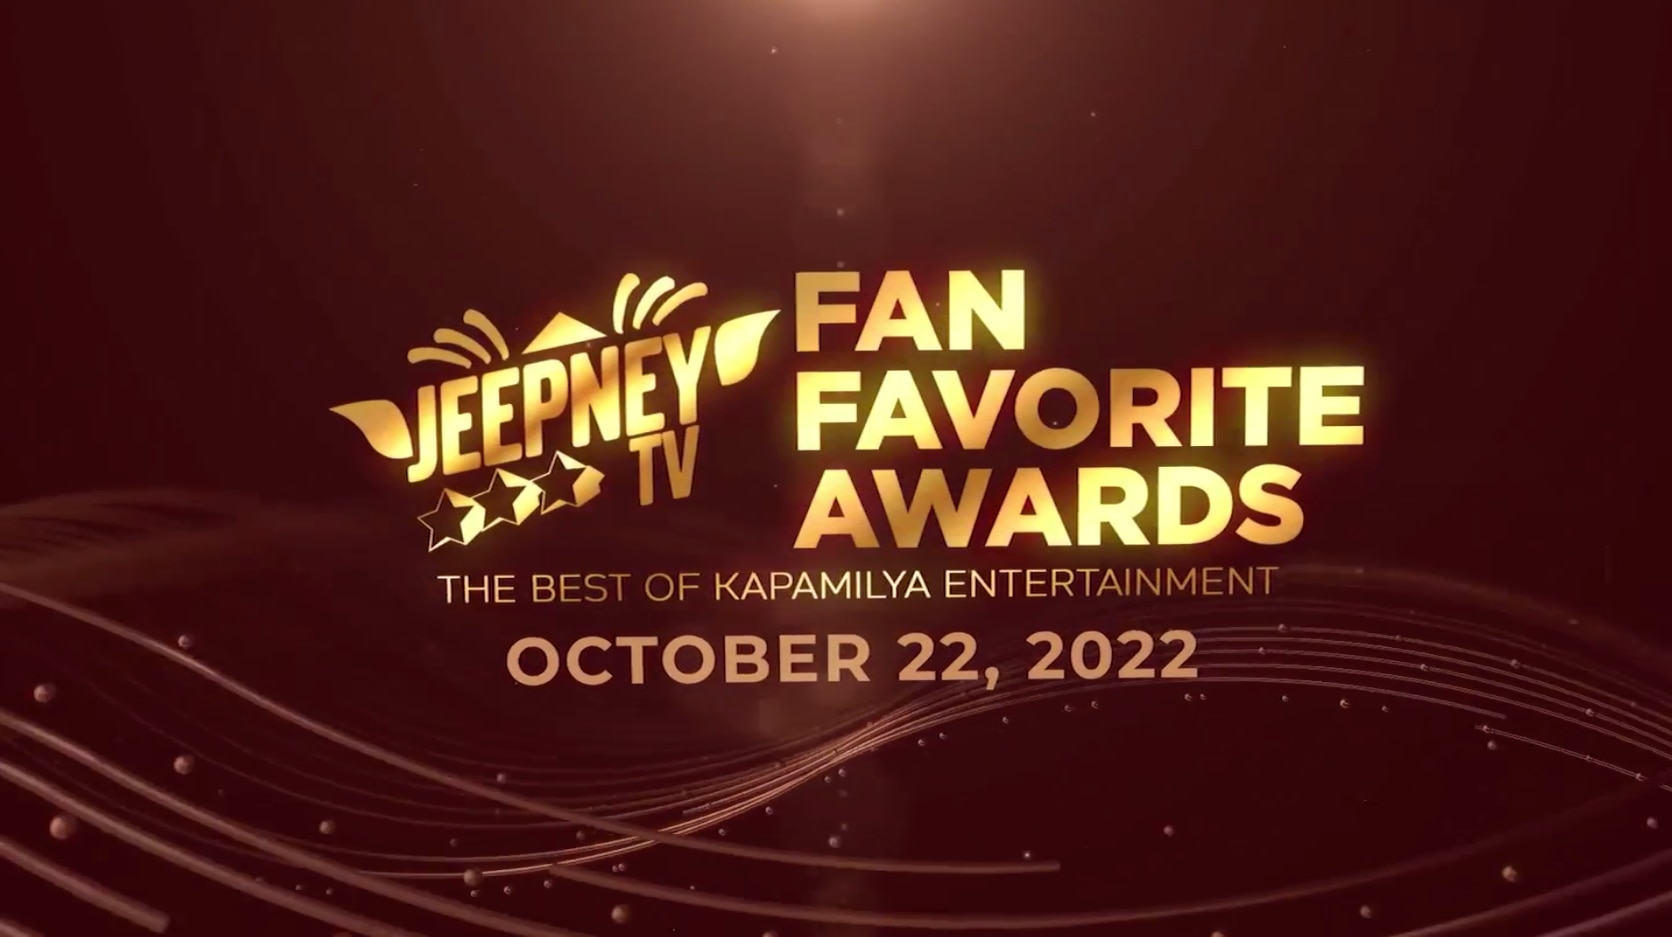 Jeepney TV to recognize beloved kapamilya shows, artists in upcoming “JTV Fan Favorite Awards”